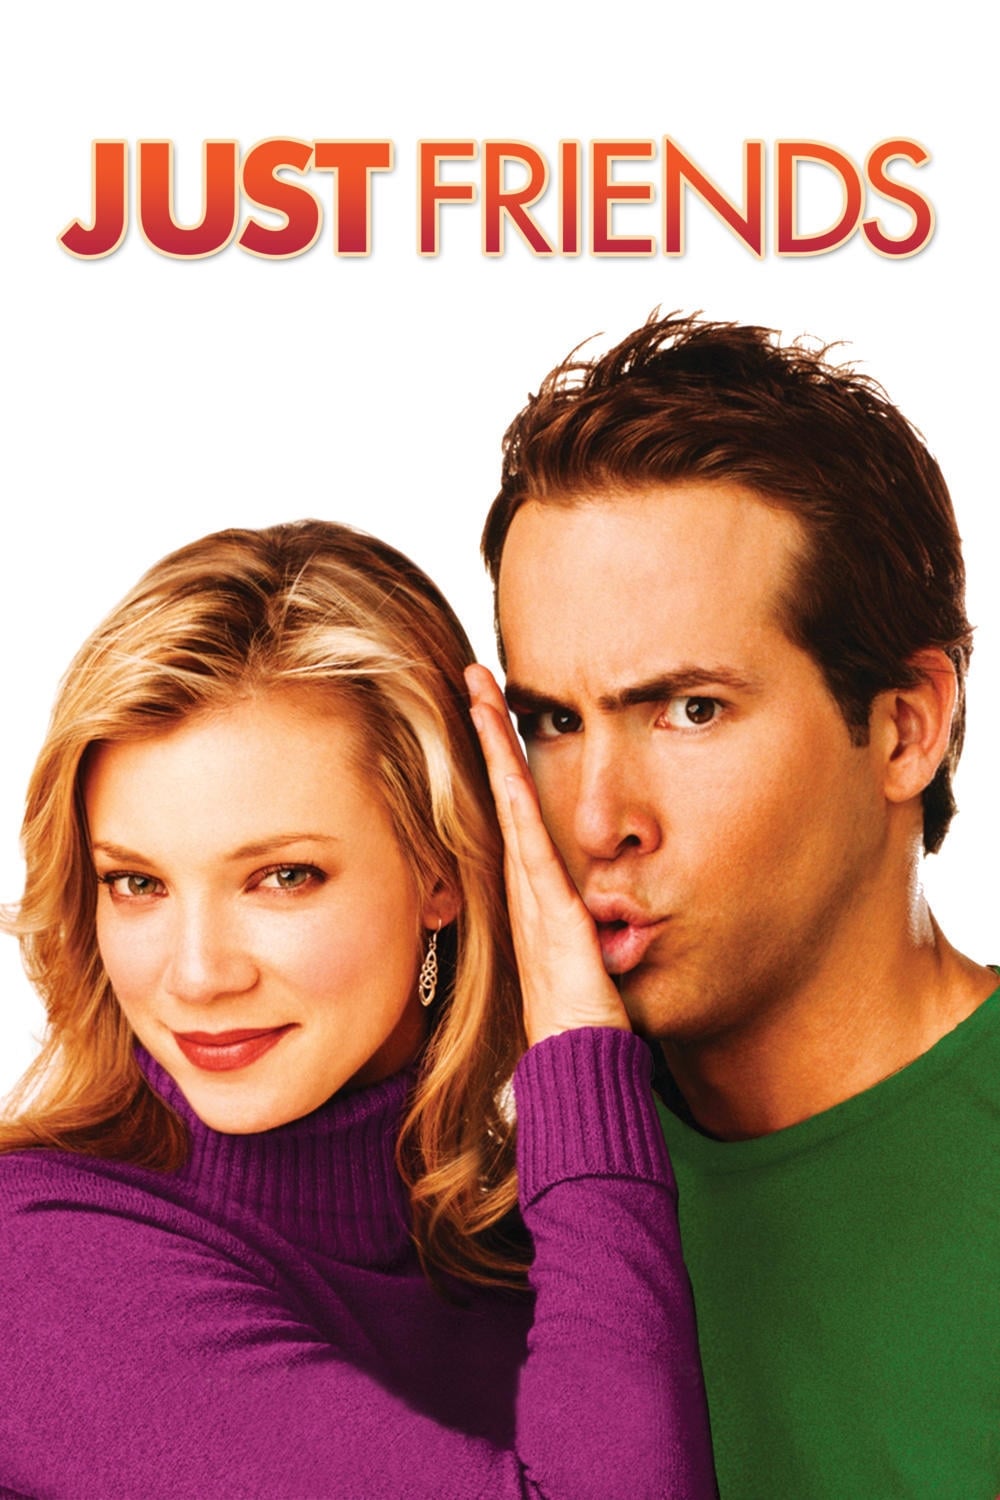 Just Friends (2005) - PhimTor.com - Xem phim Torrent trực tiếp Full Hd  1080p Vietsub